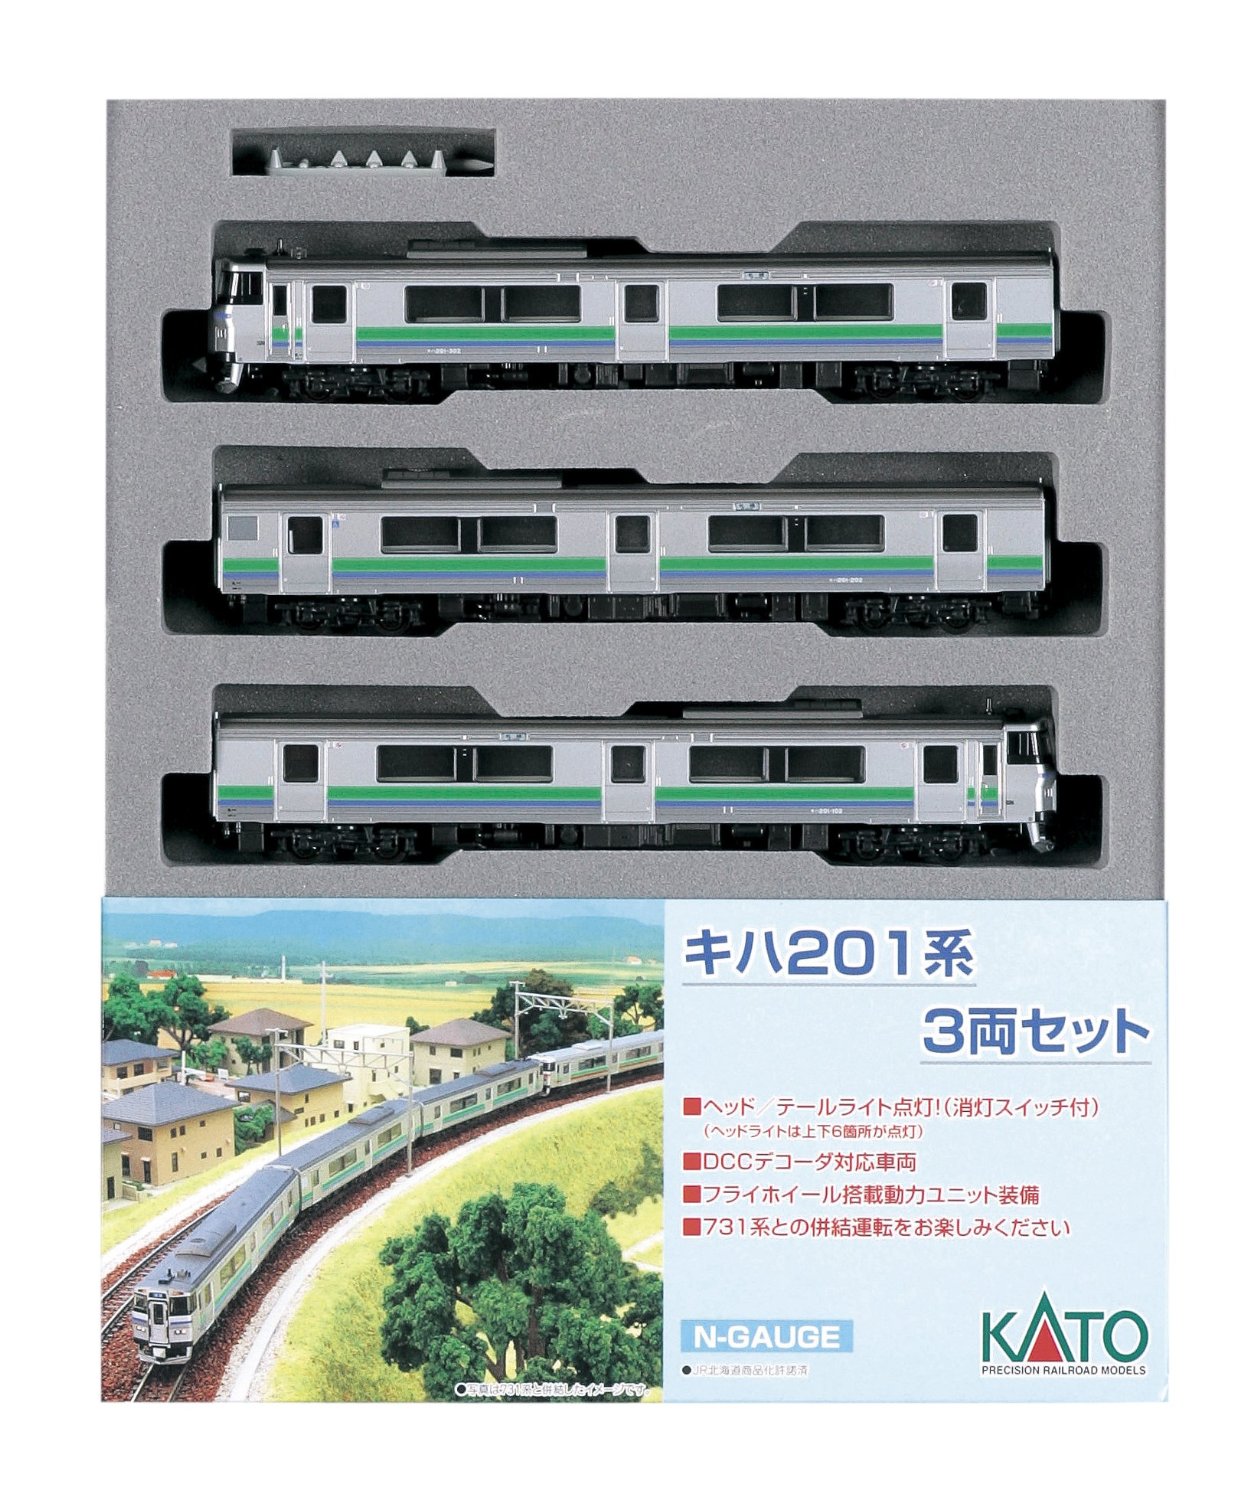 Kato Diesel Car Commuter (N)